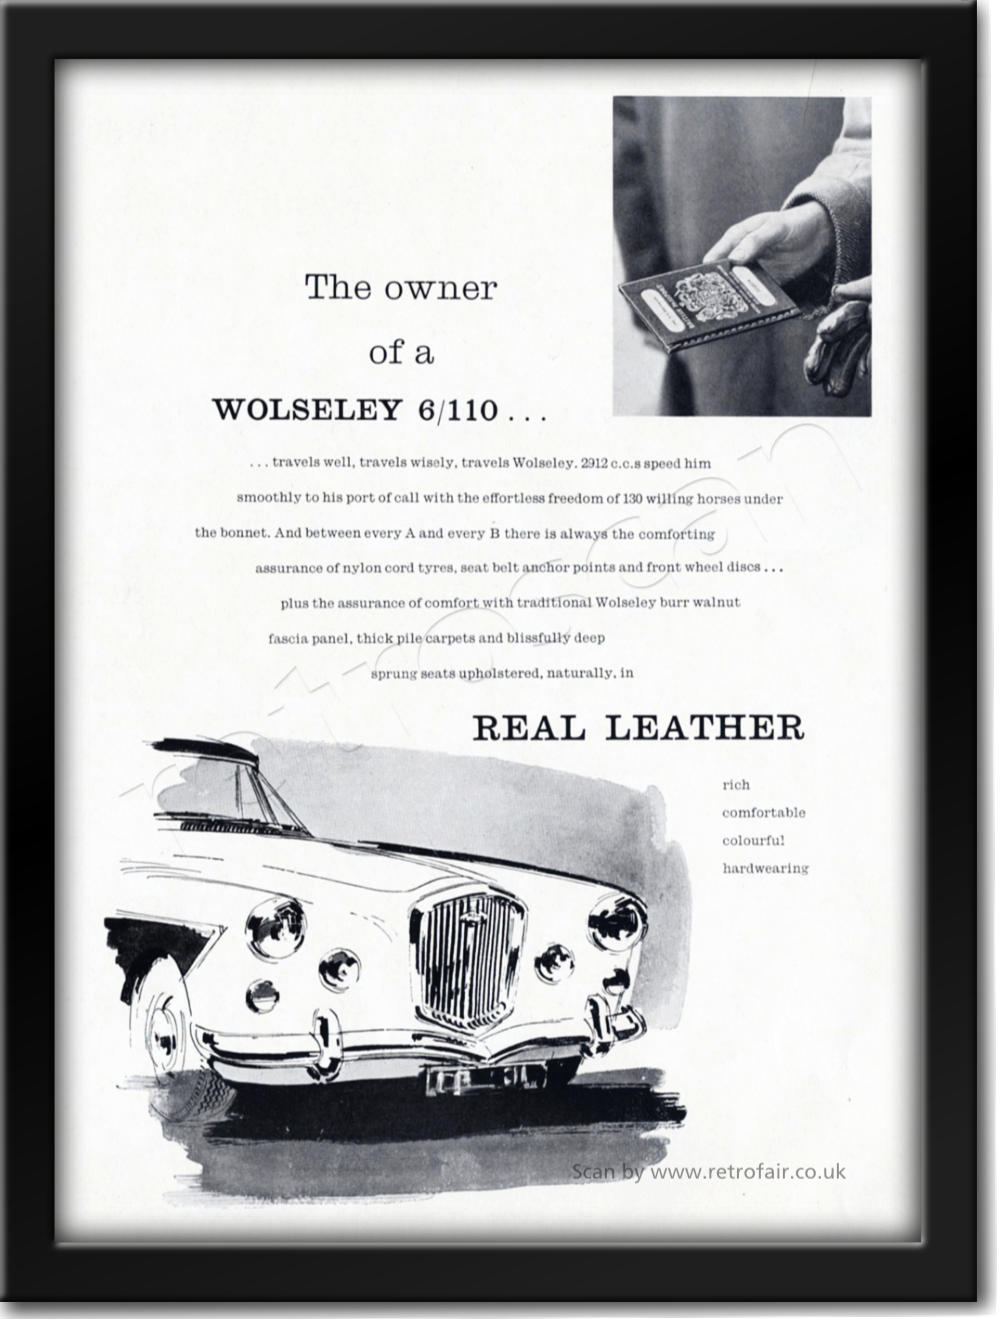 1962 vintage Wolseley 6/110 advert